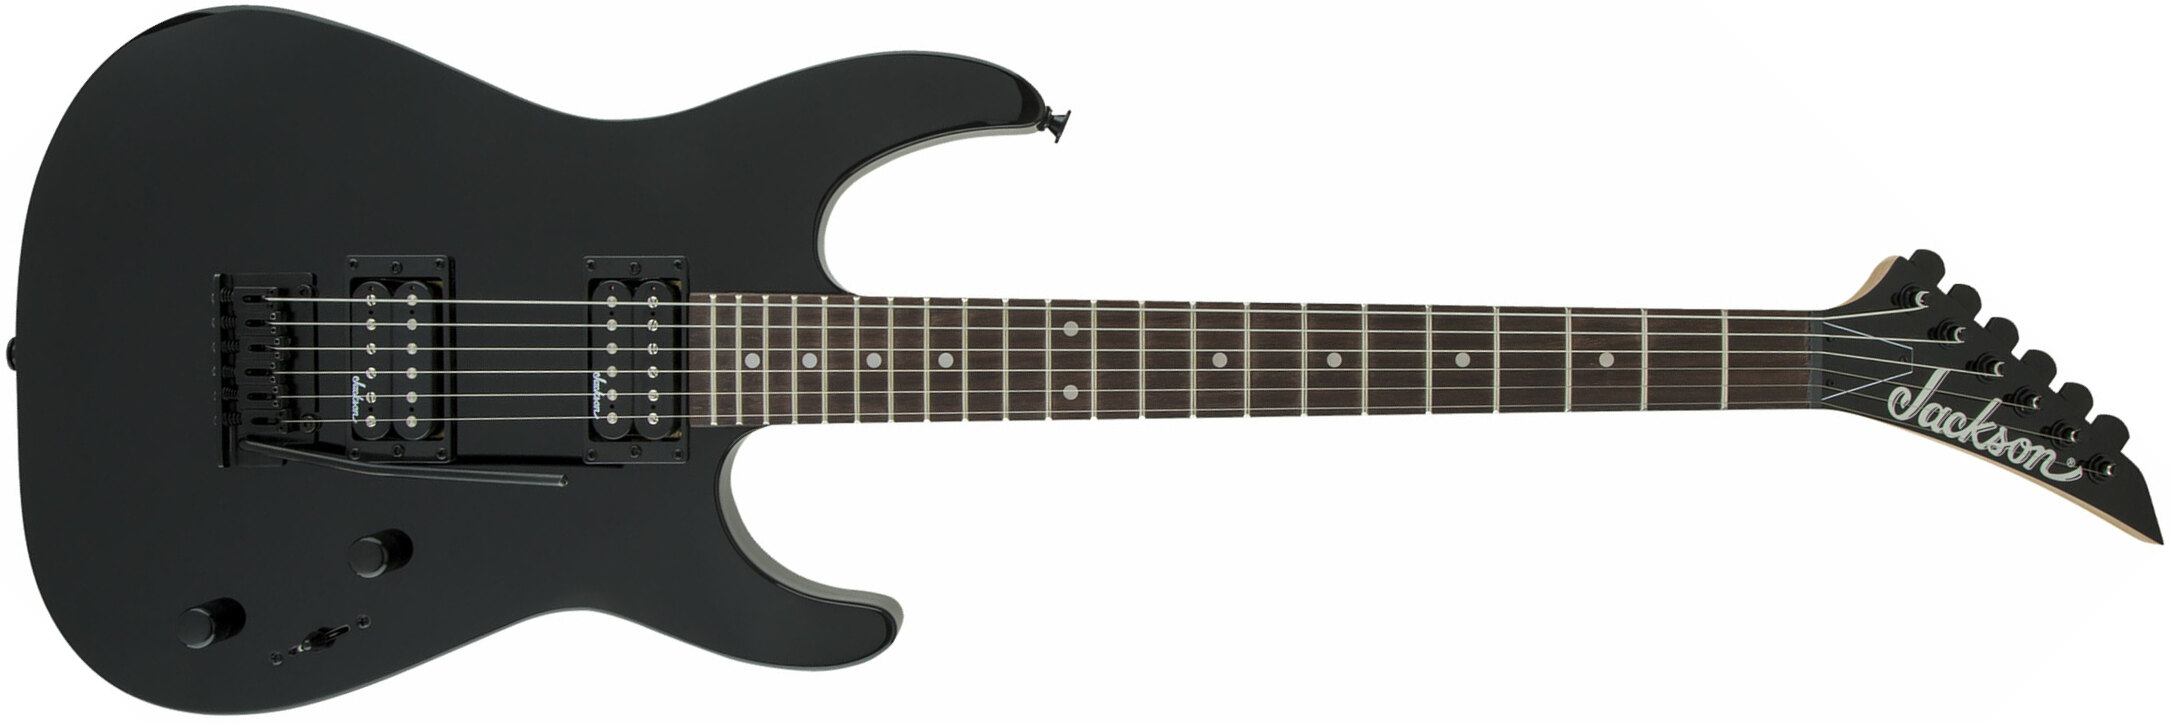 Jackson Dinky Js11 2h Trem Ama - Gloss Black - Str shape electric guitar - Main picture